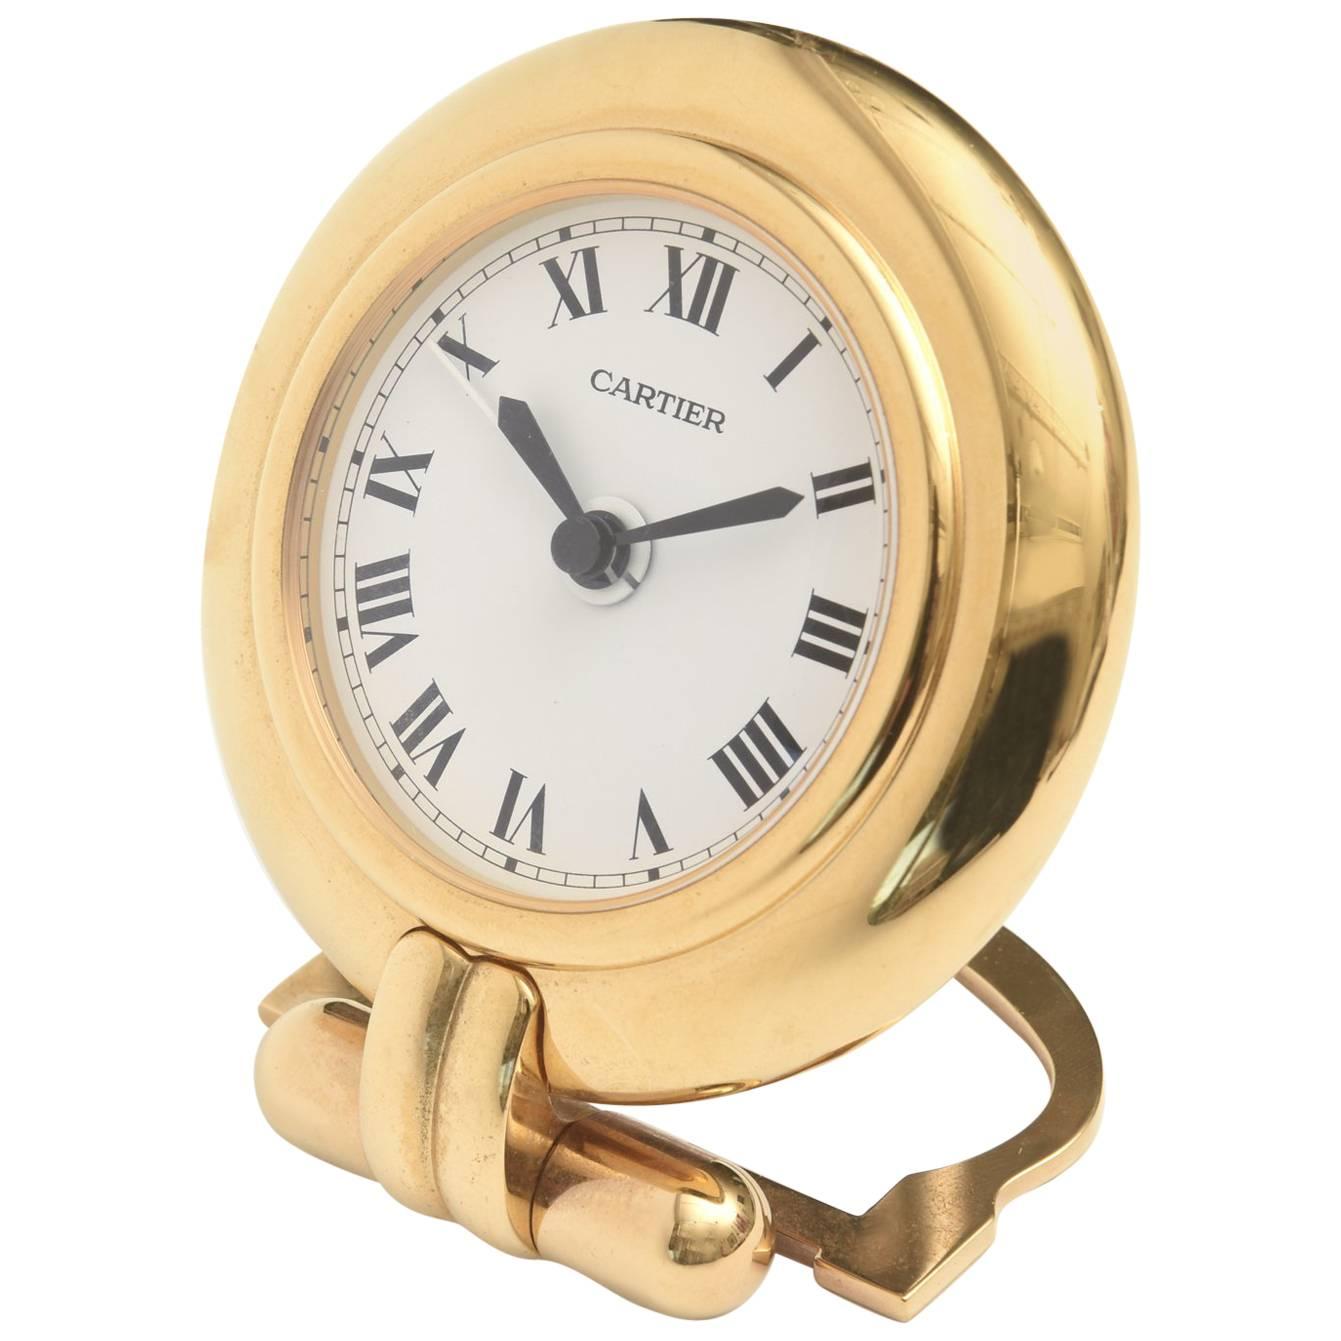  Cartier 24-Karat Gold-Plated Travel, Desk or Nightstand Quartz Clock / SAT.SALE